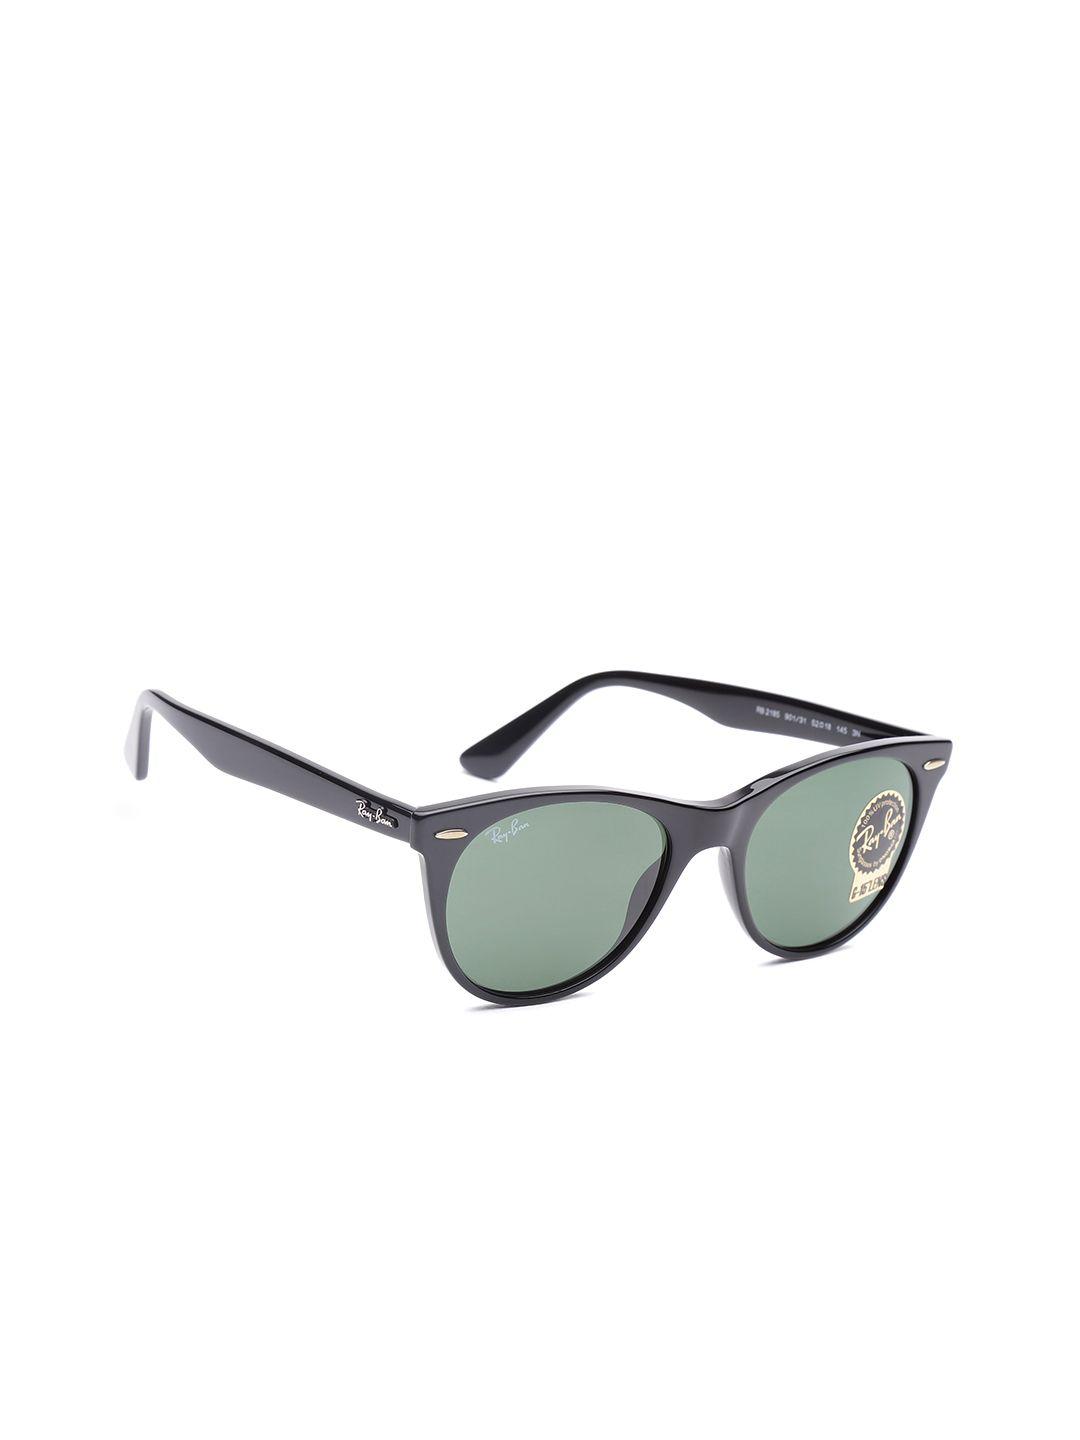 ray-ban unisex cateye sunglasses 0rb2185901/31